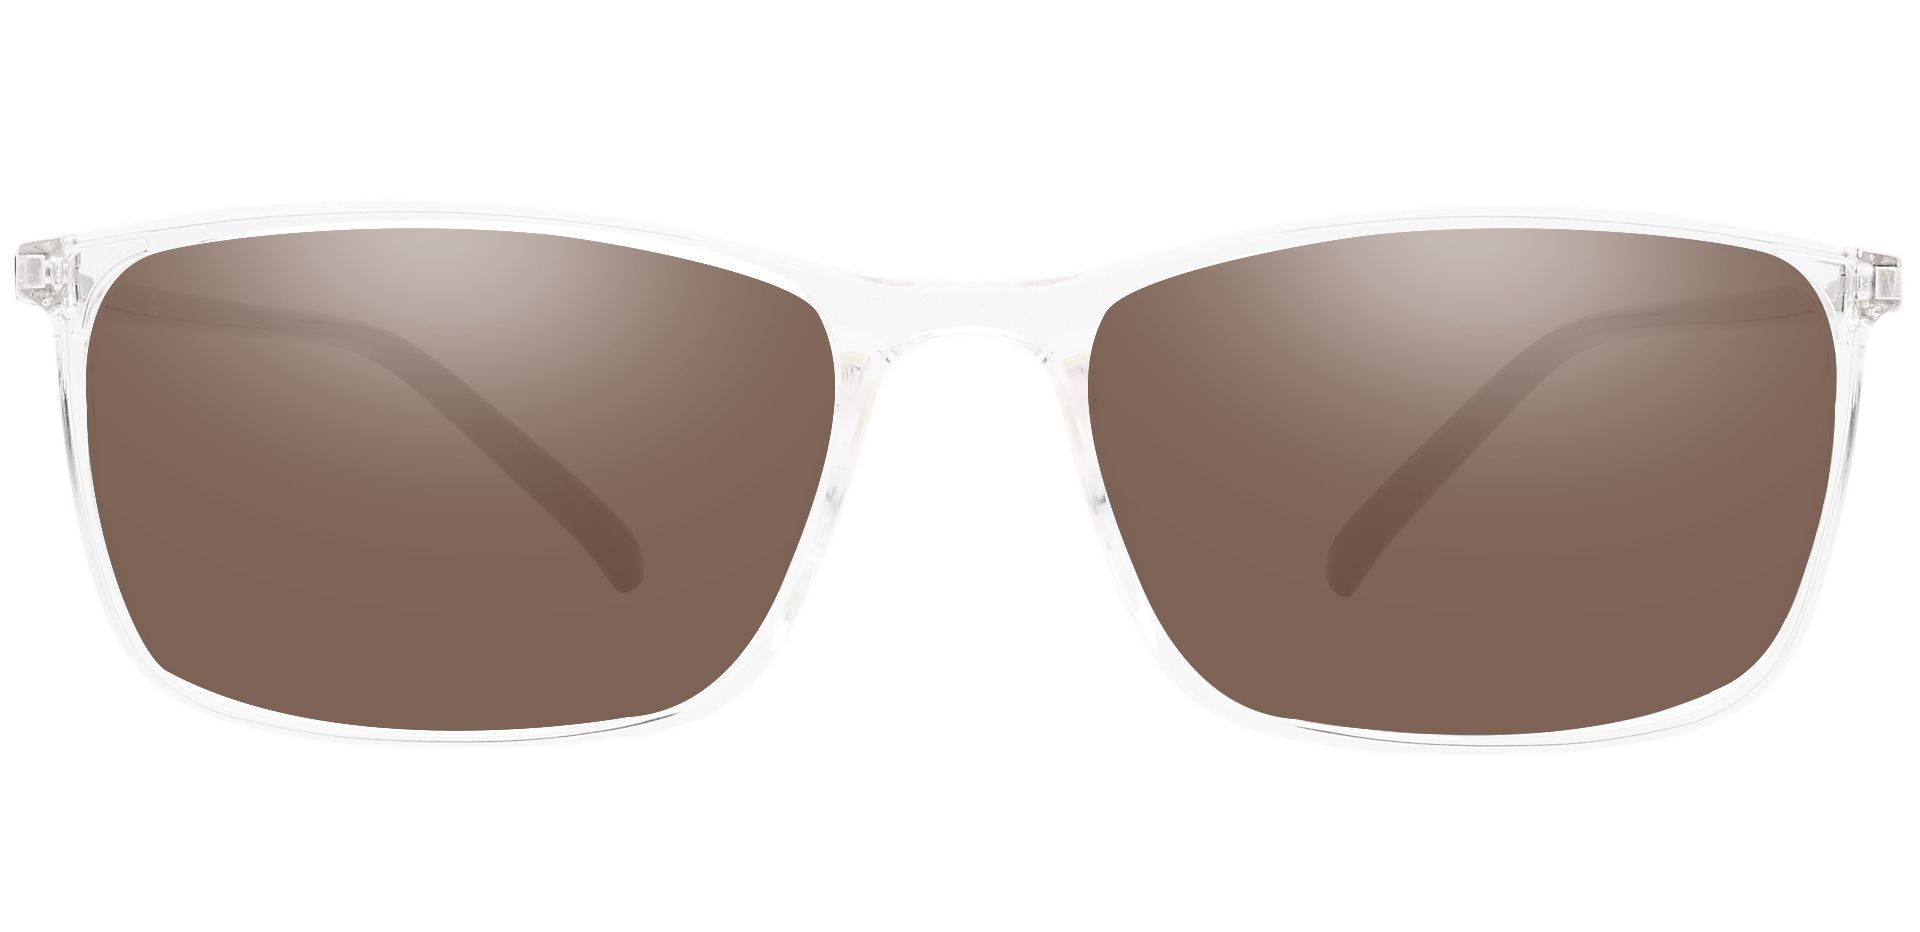 Fuji Rectangle Prescription Sunglasses - Clear Frame With Brown Lenses